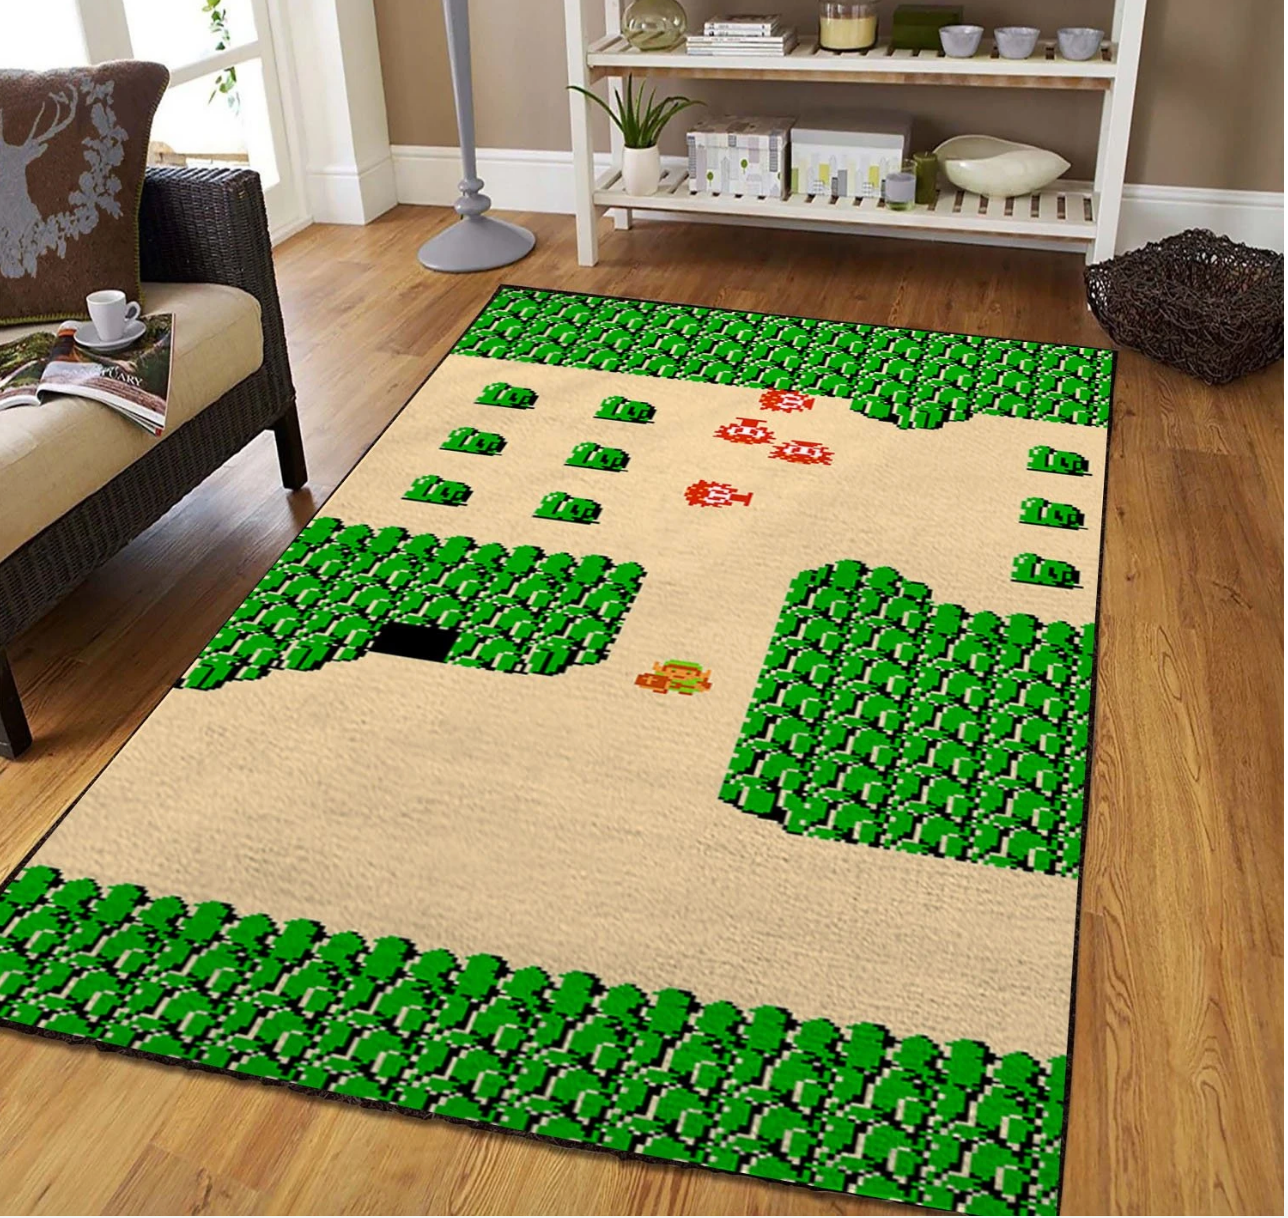 Classic The Legend Of Zelda Carpet Area Rug Floor Home Room Decor